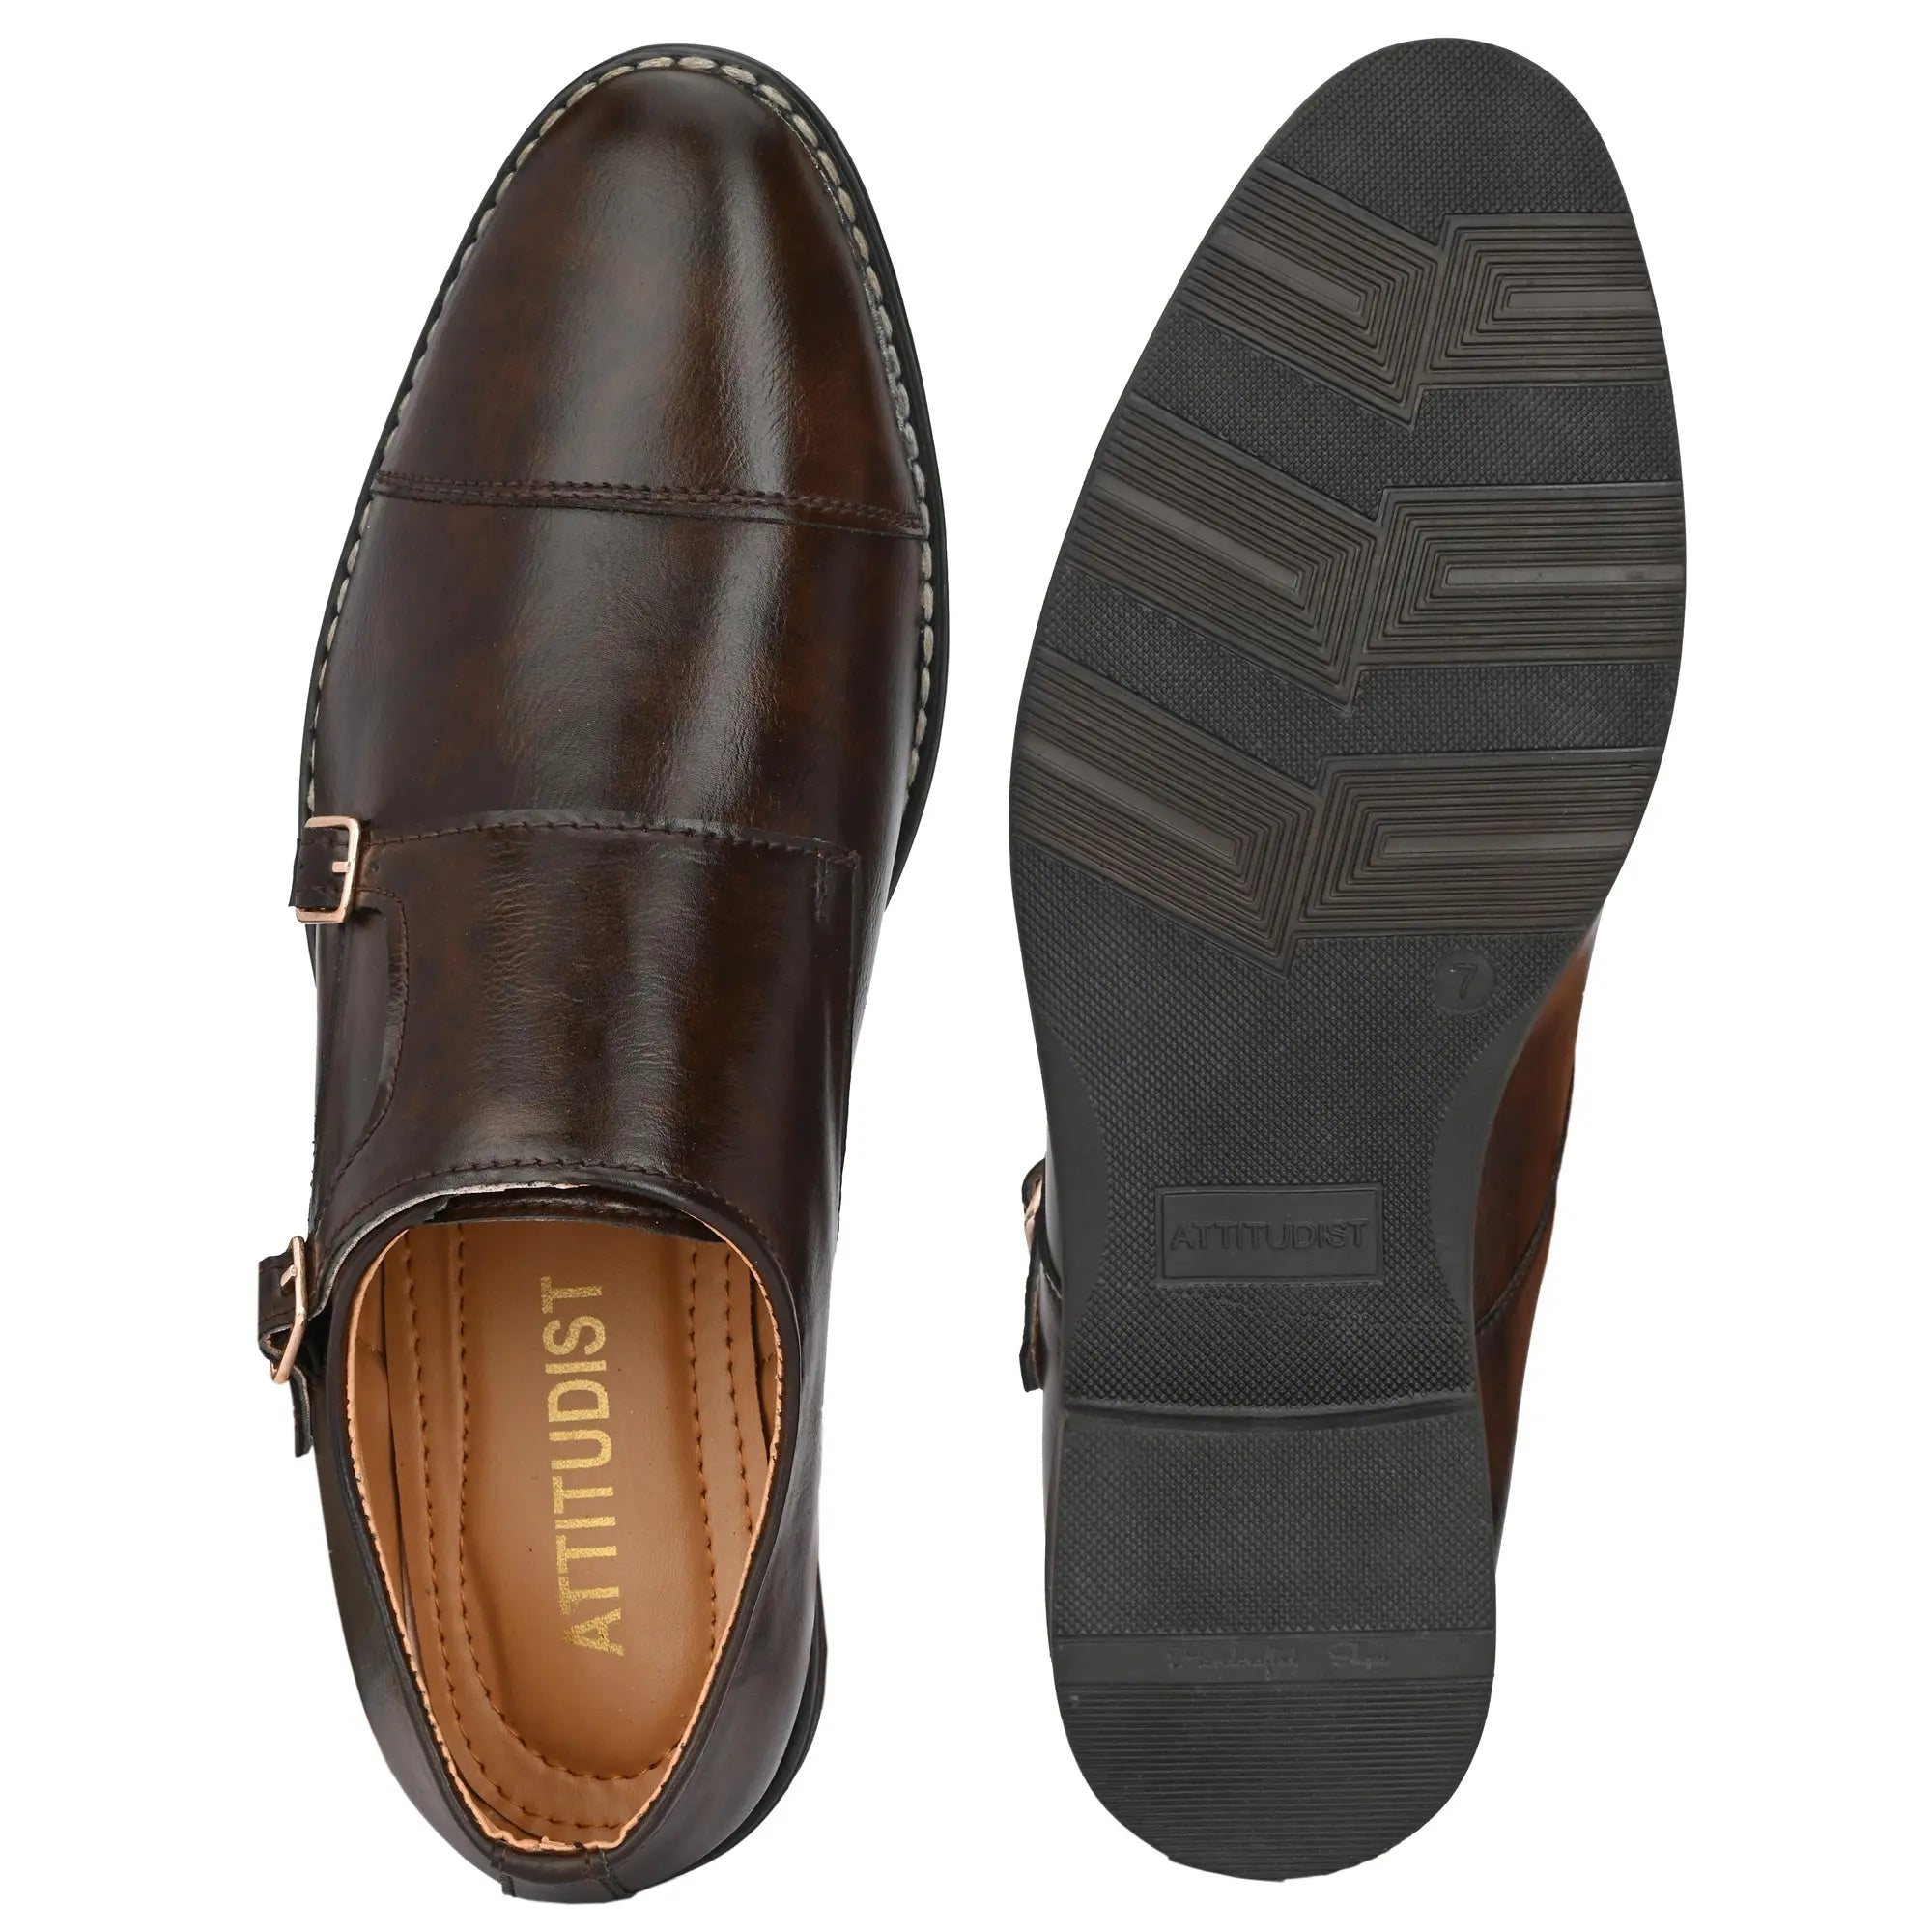 brown-double-monk-strap-attitudist-shoes-for-men-with-buckle-sp4b